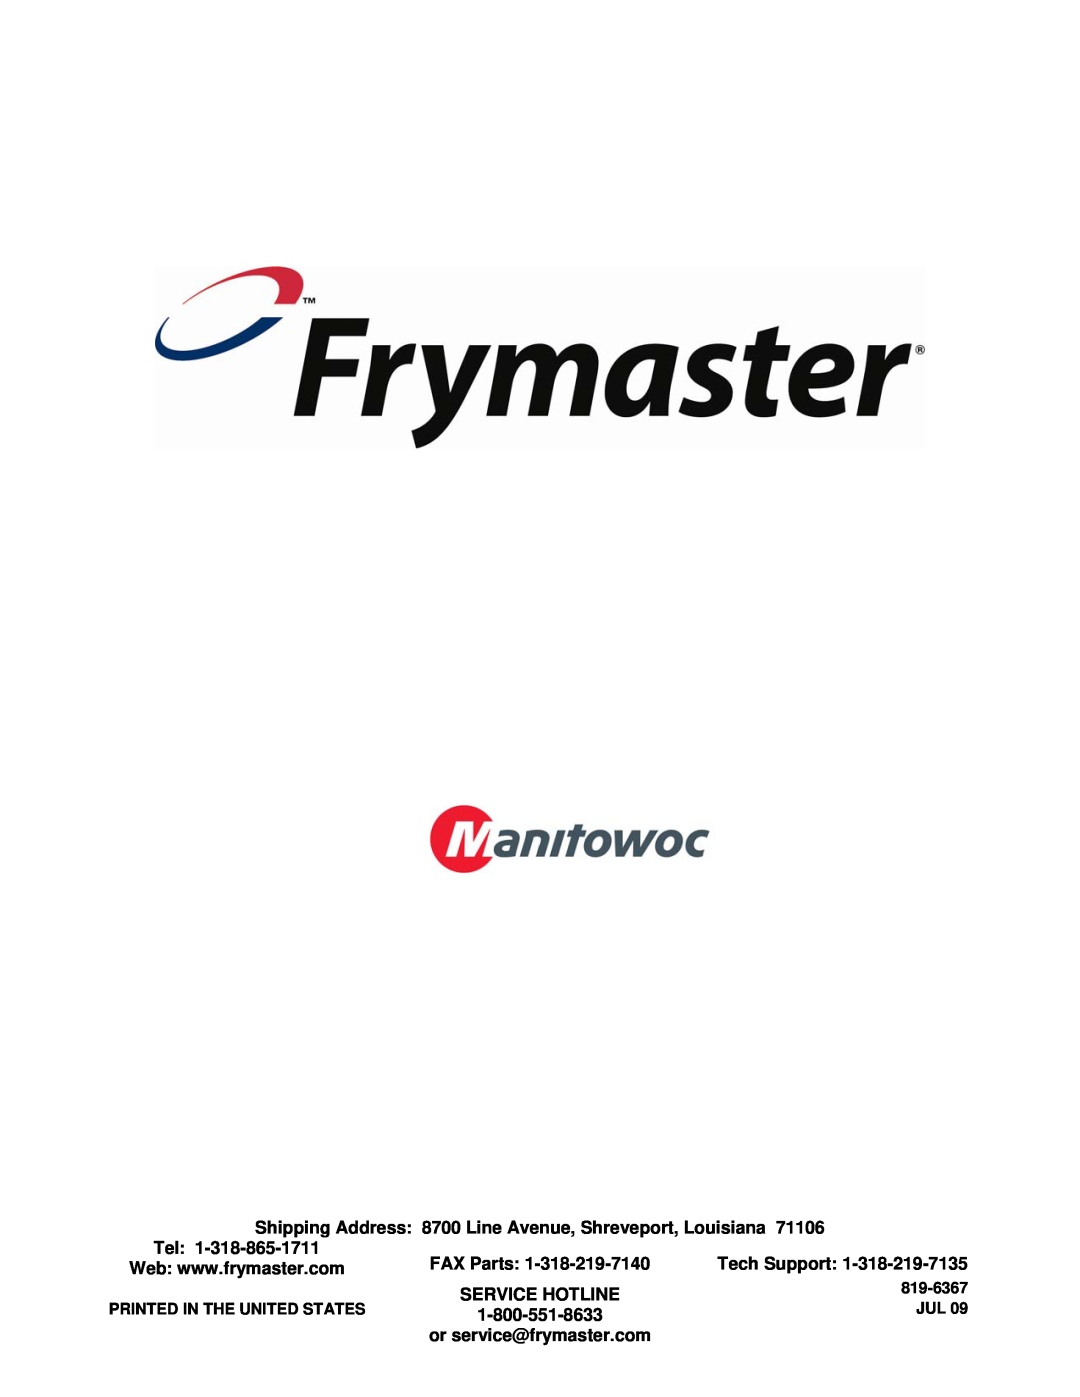 Frymaster H55 Shipping Address 8700 Line Avenue, Shreveport, Louisiana, FAX Parts, Tech Support, Service Hotline, 819-6367 